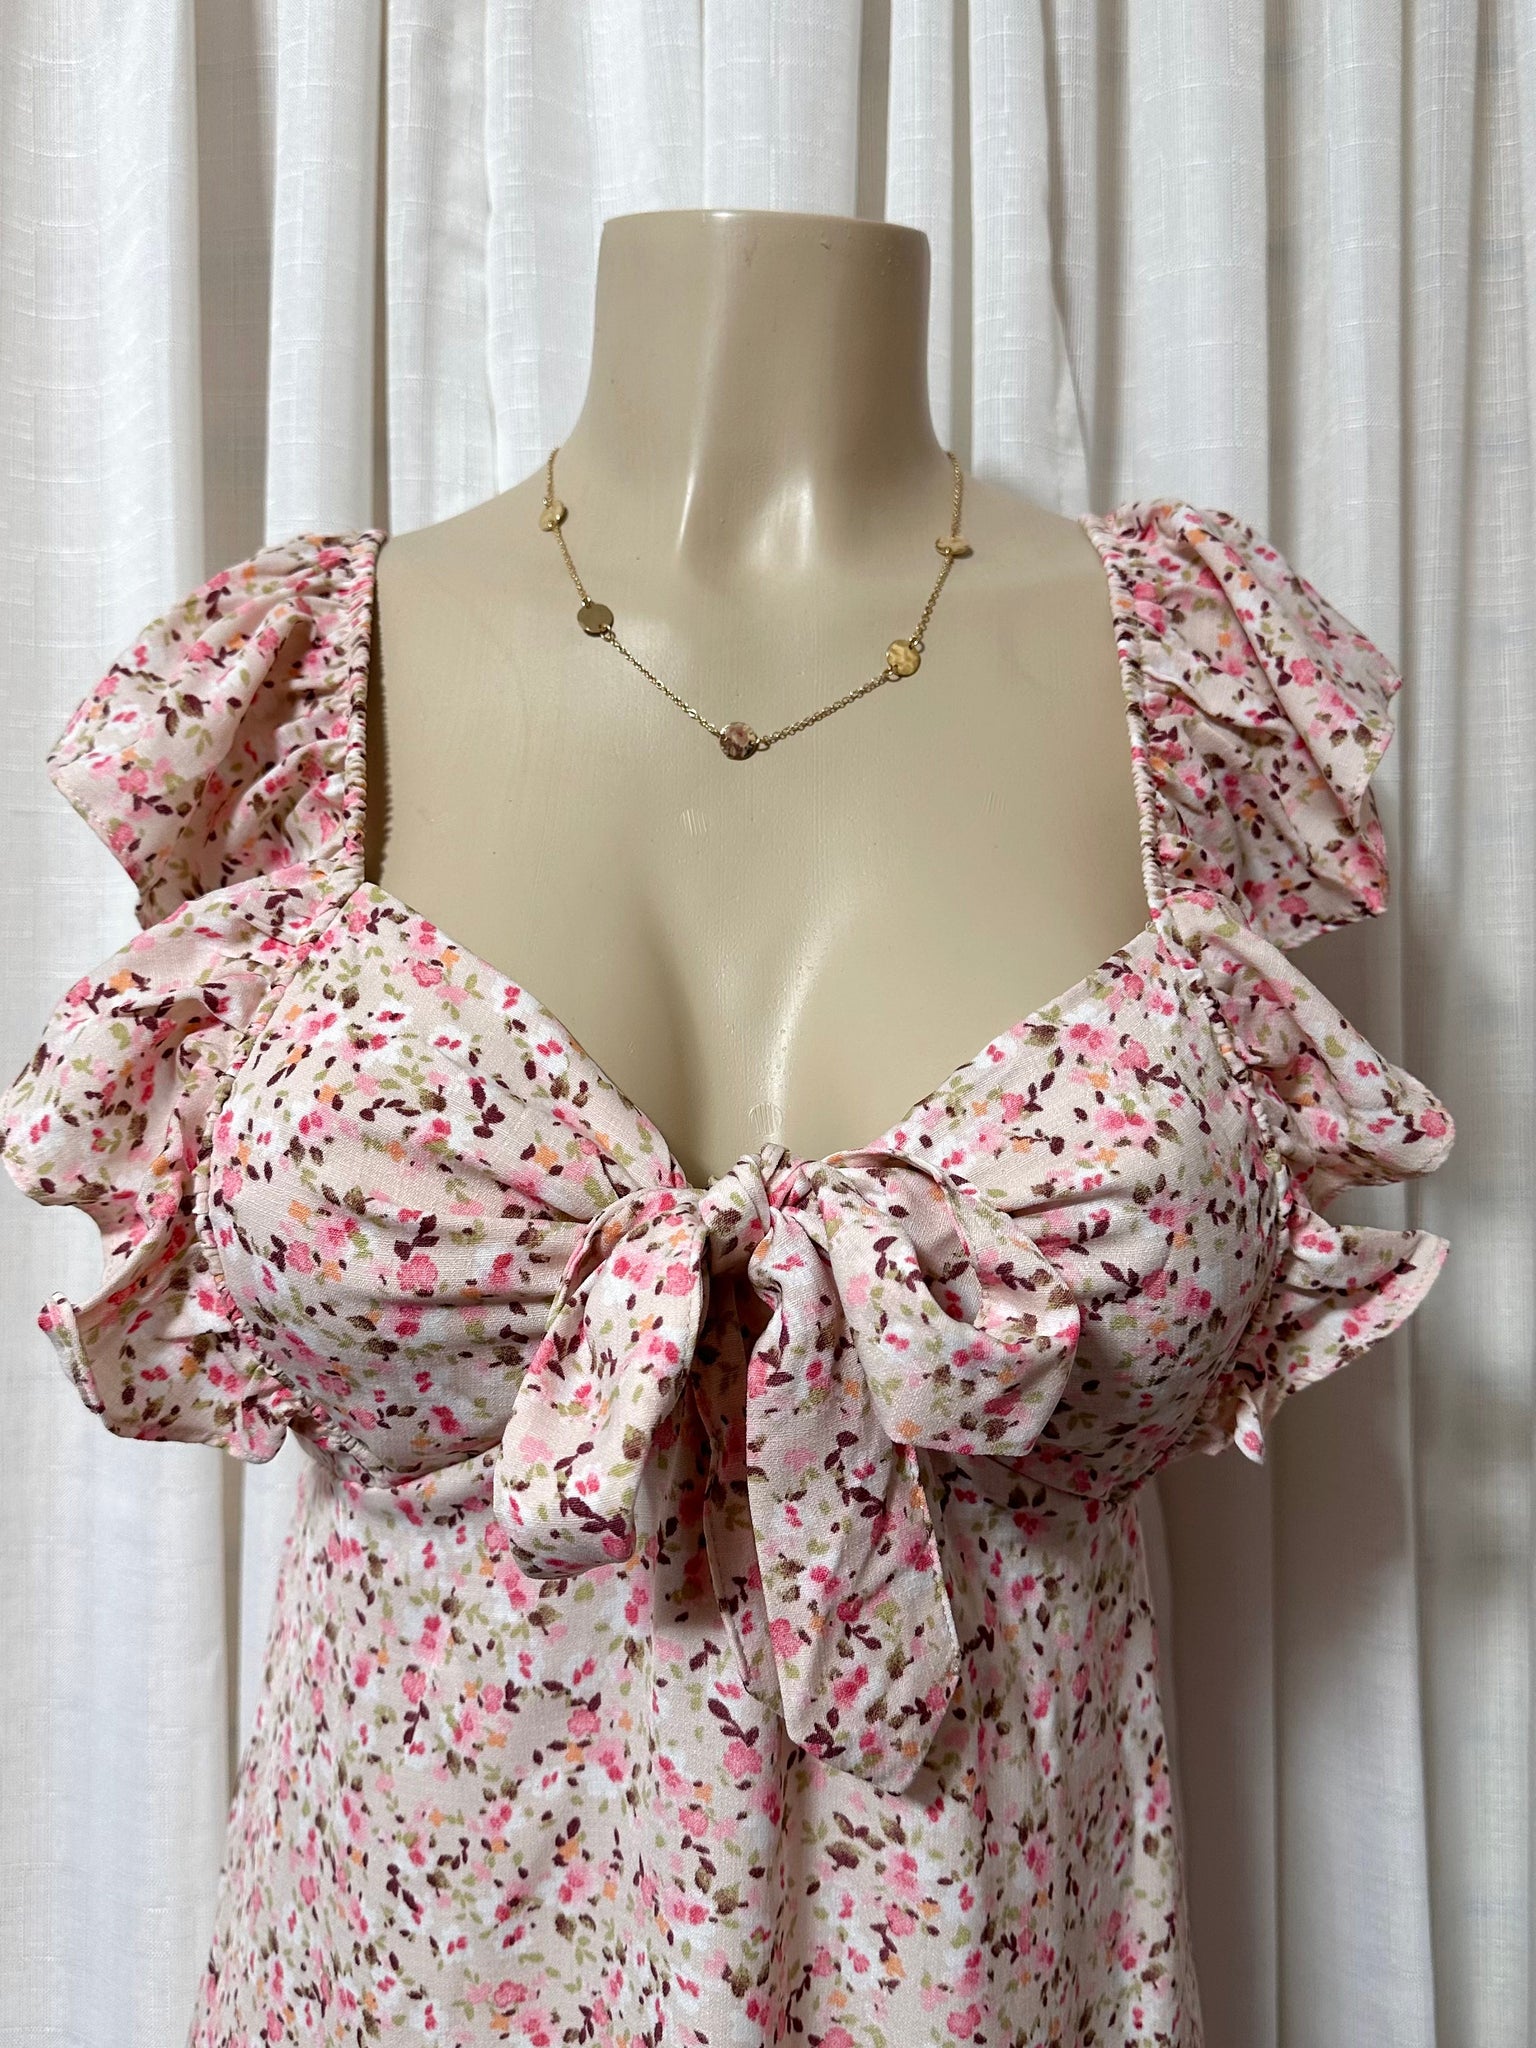 The “Cherry Blossom” Ruffle Dress